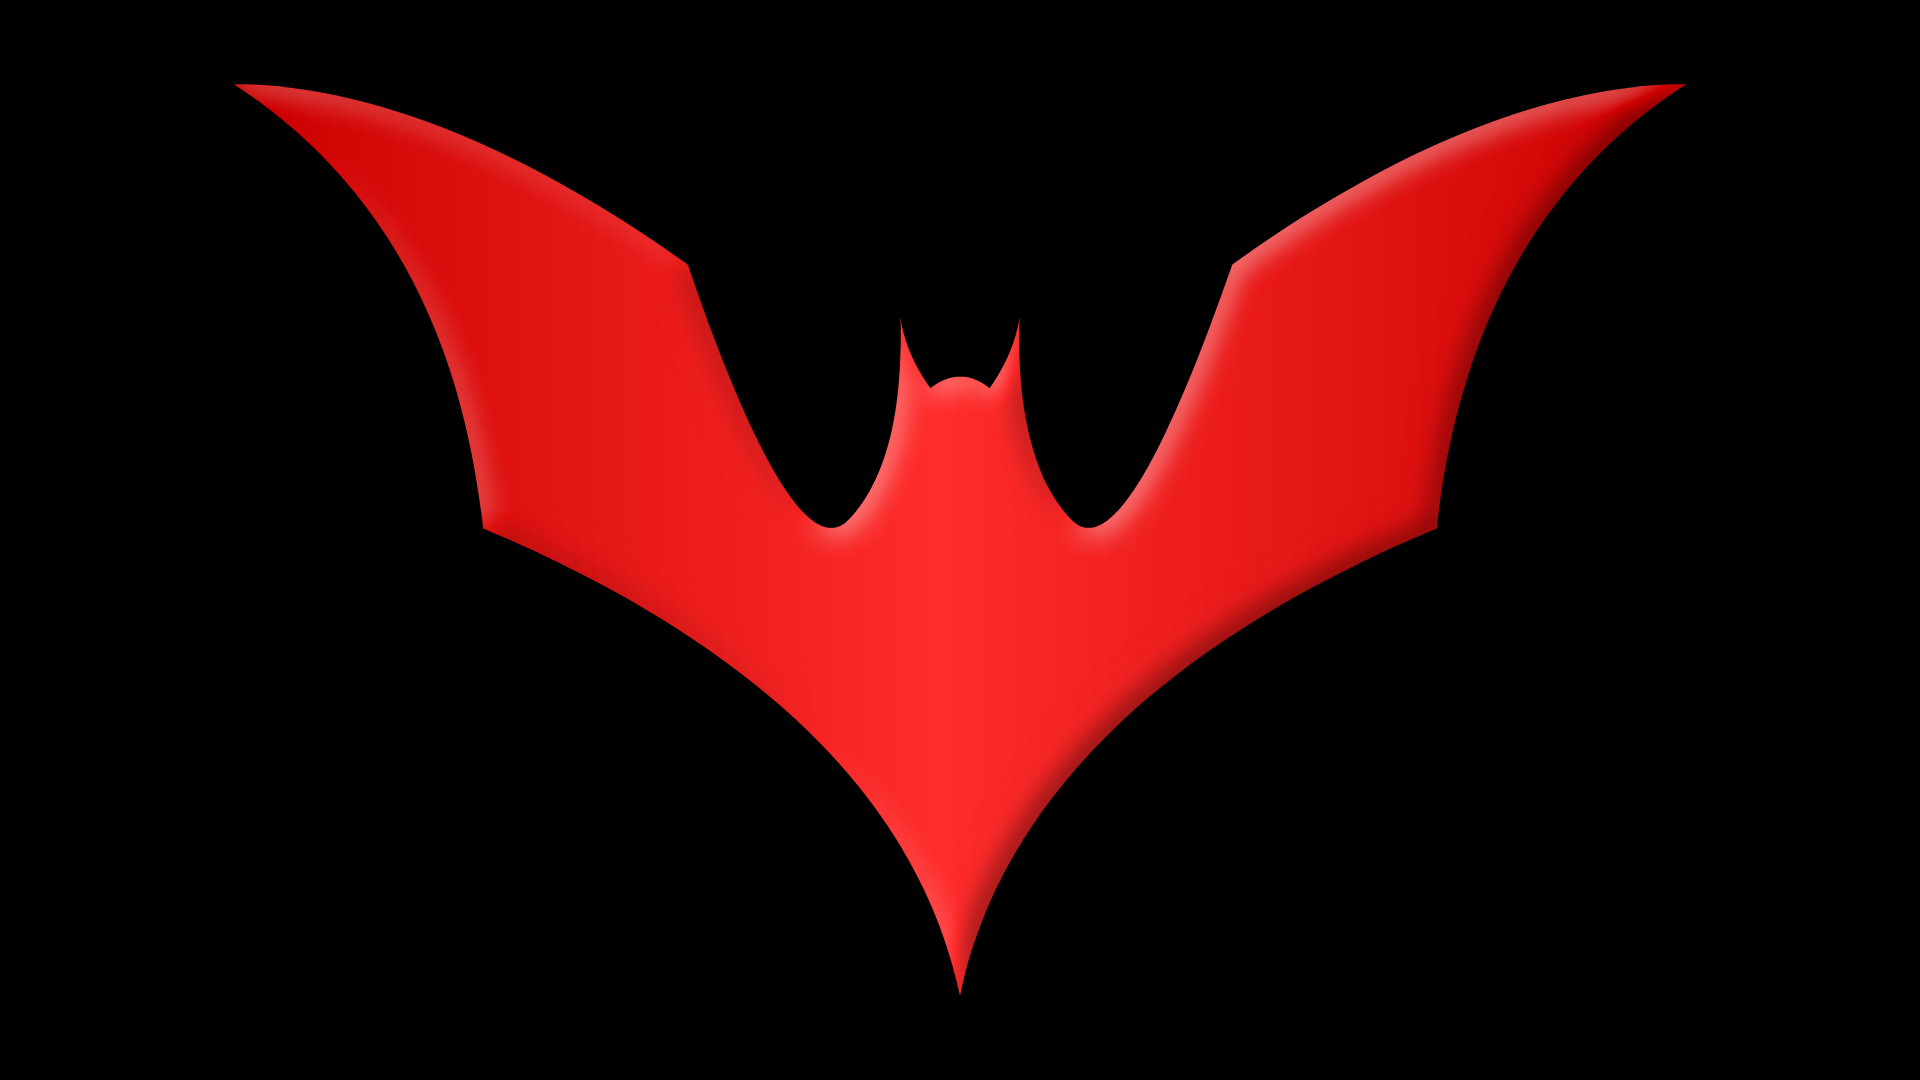 Batman Beyond Full HD Wallpaper and Background Image | 1920x1080 | ID ...